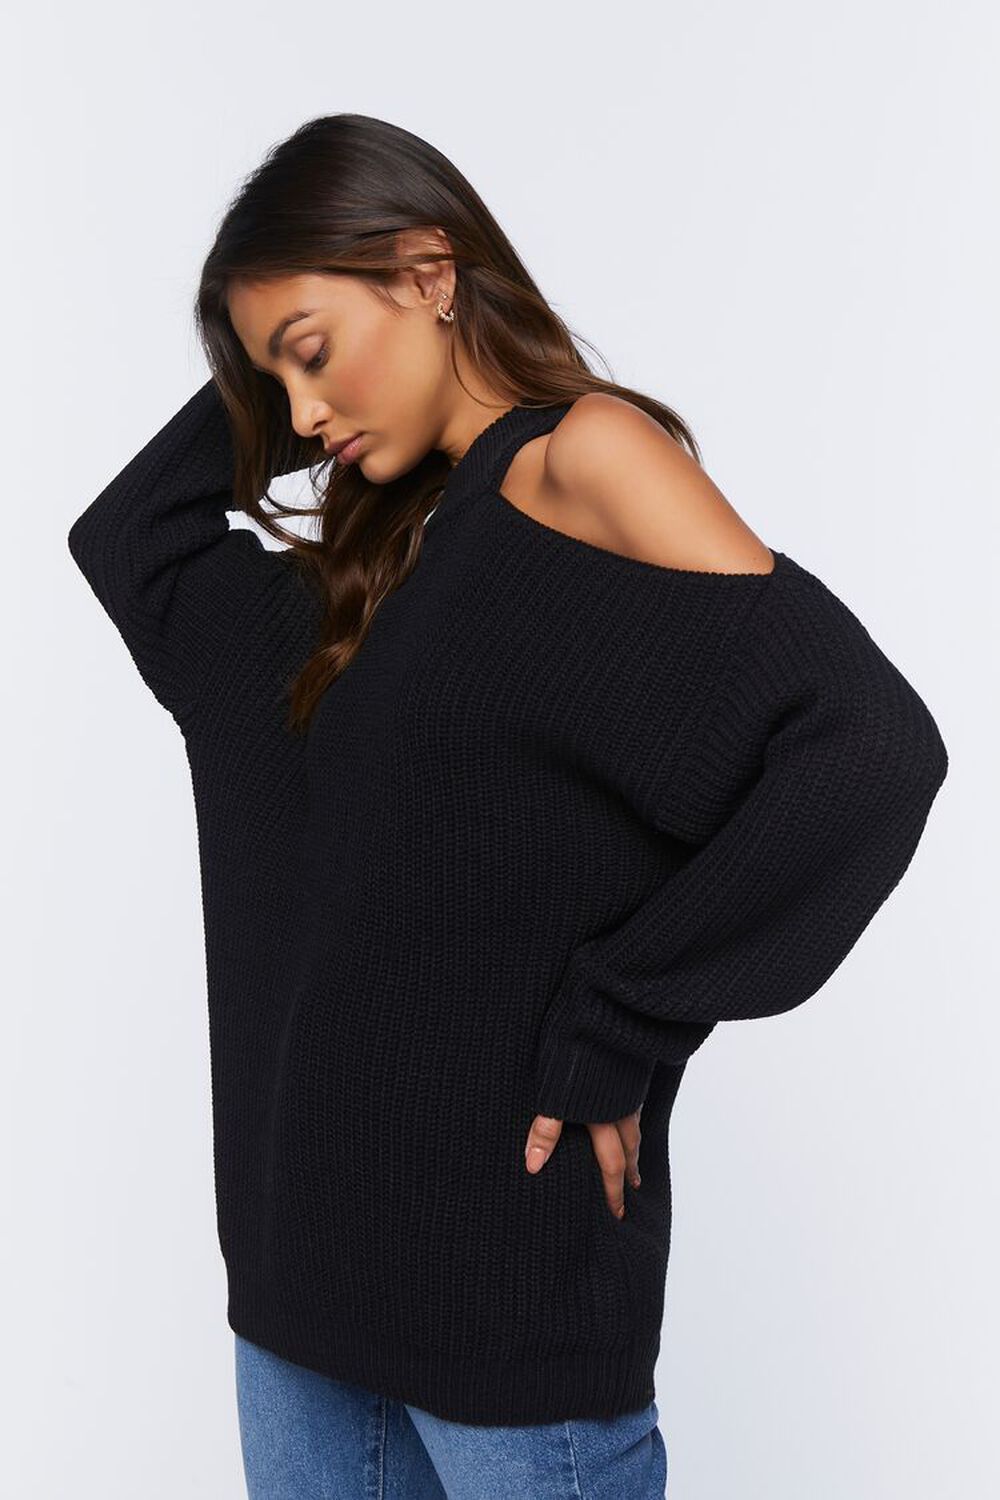 BLACK Asymmetrical Open-Shoulder Sweater, image 2